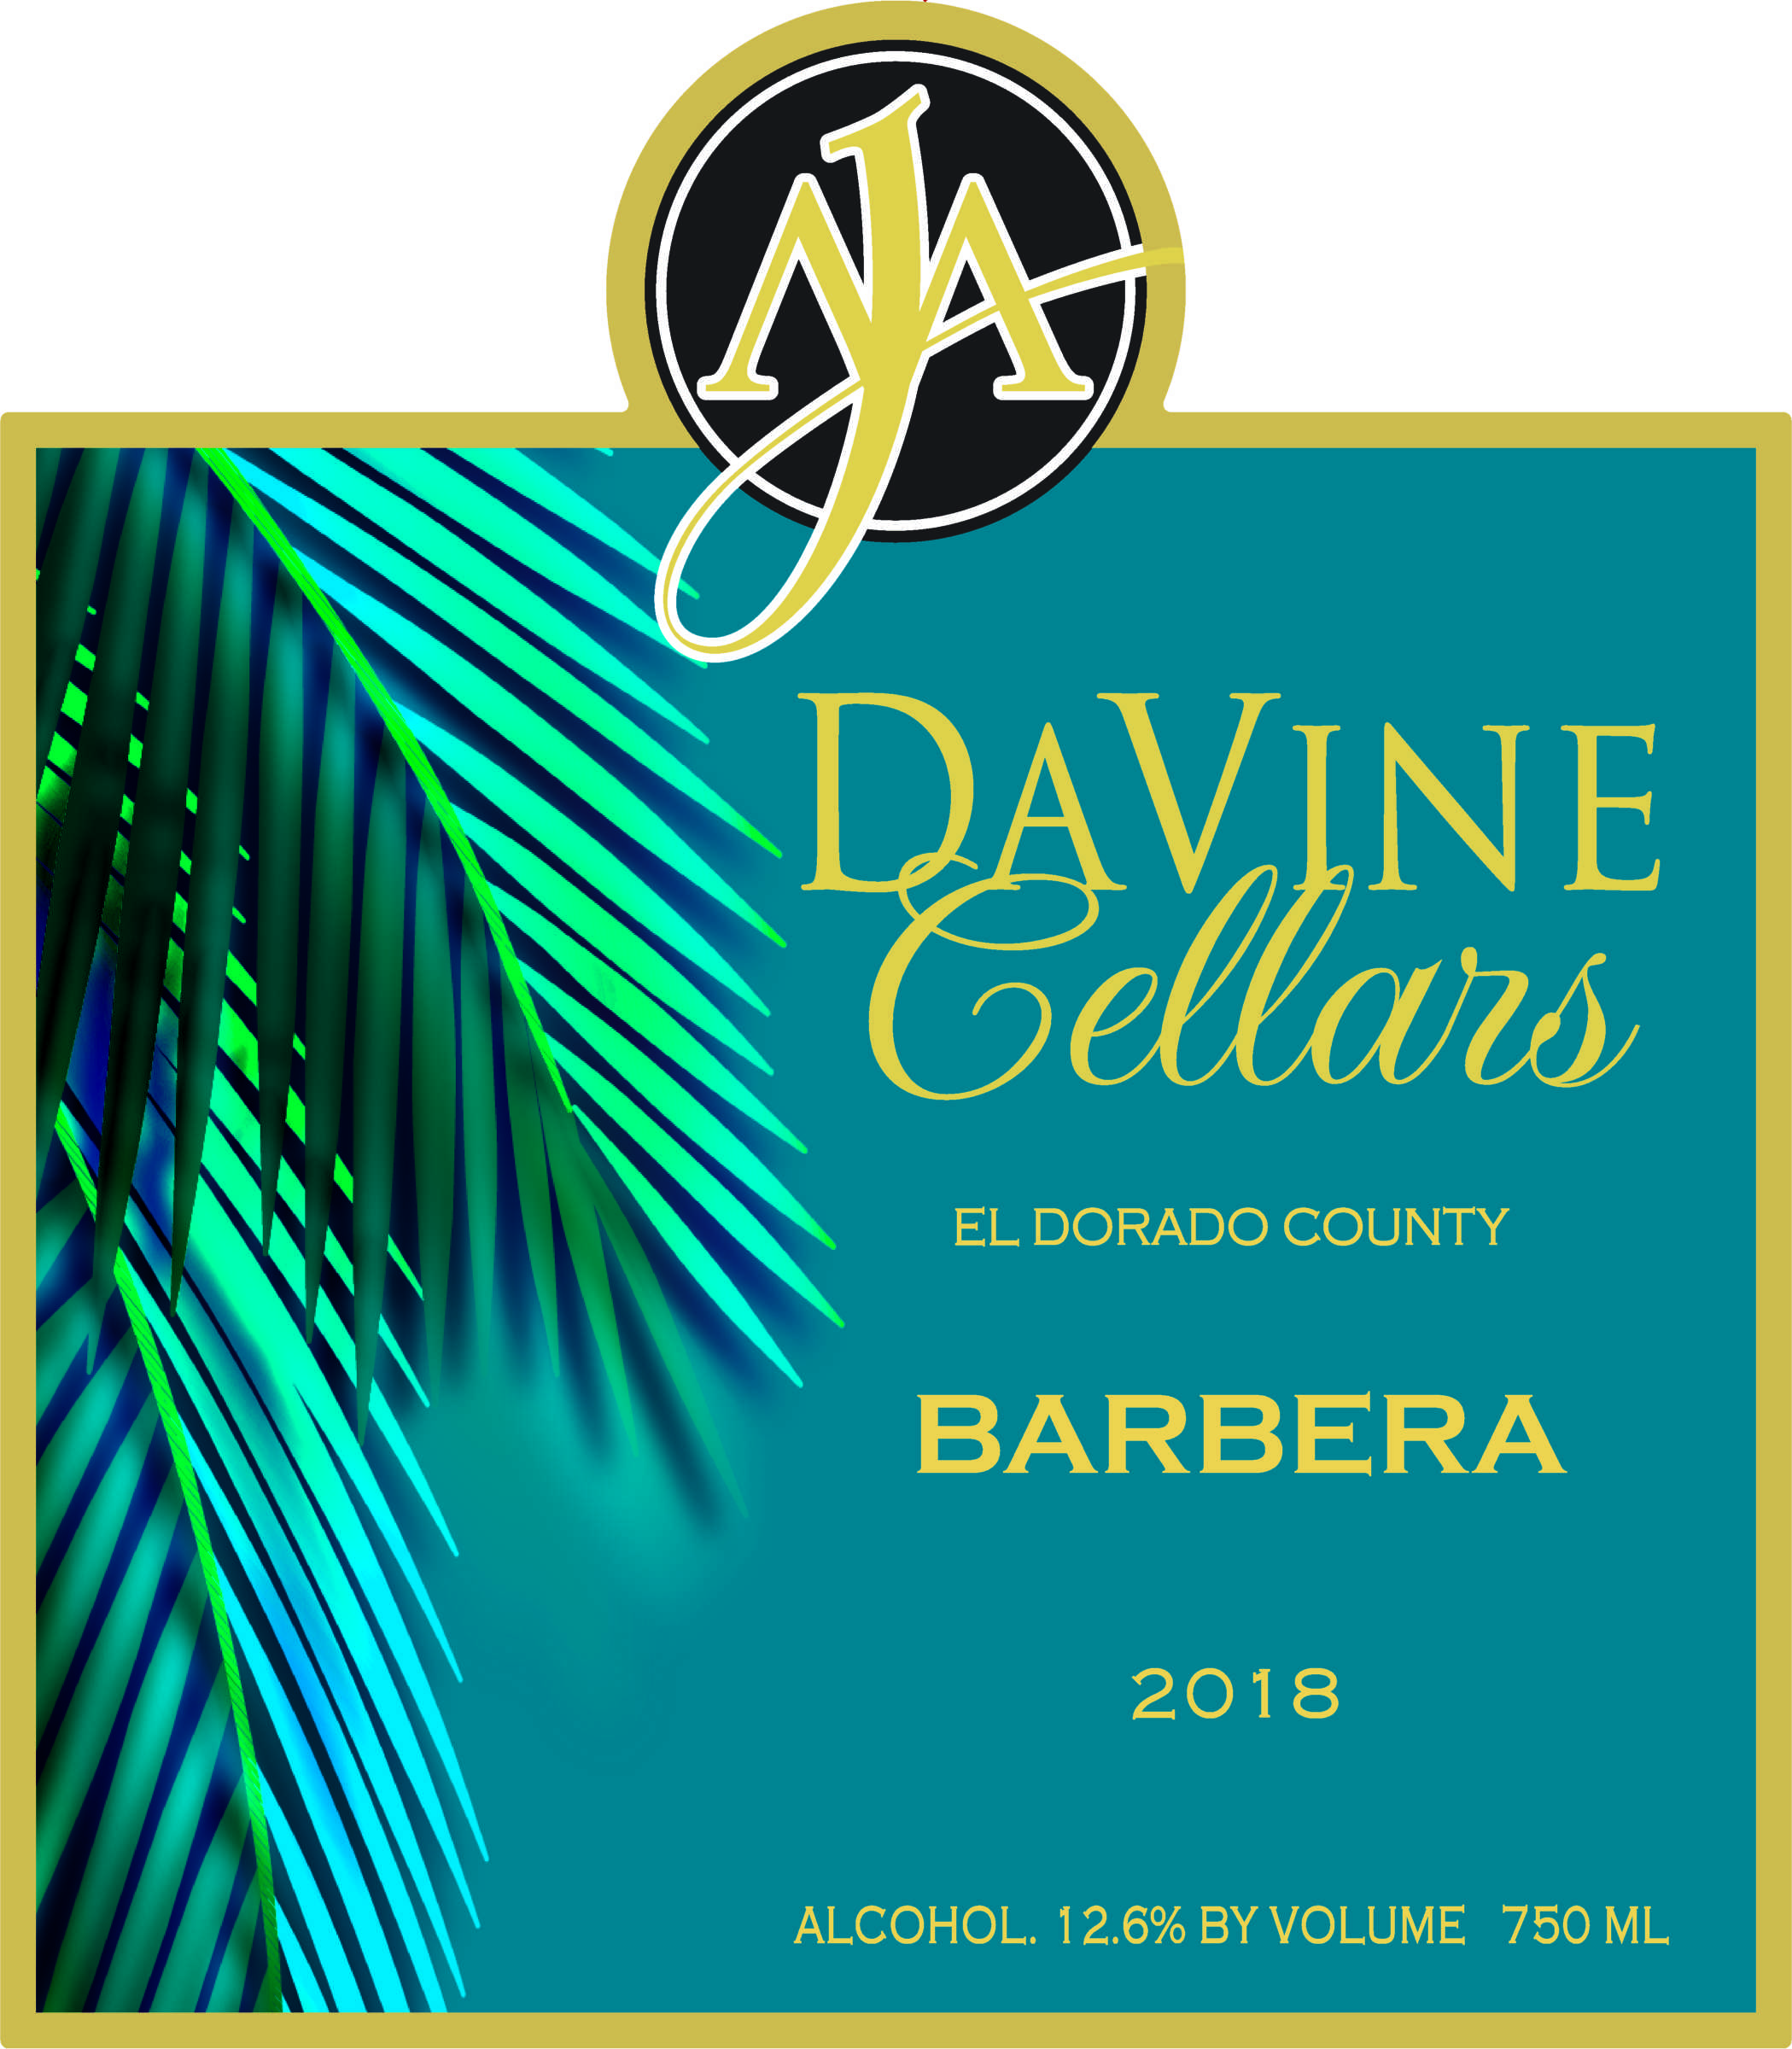 Product Image for 2018 El Dorado County Barbera "Scandalous"